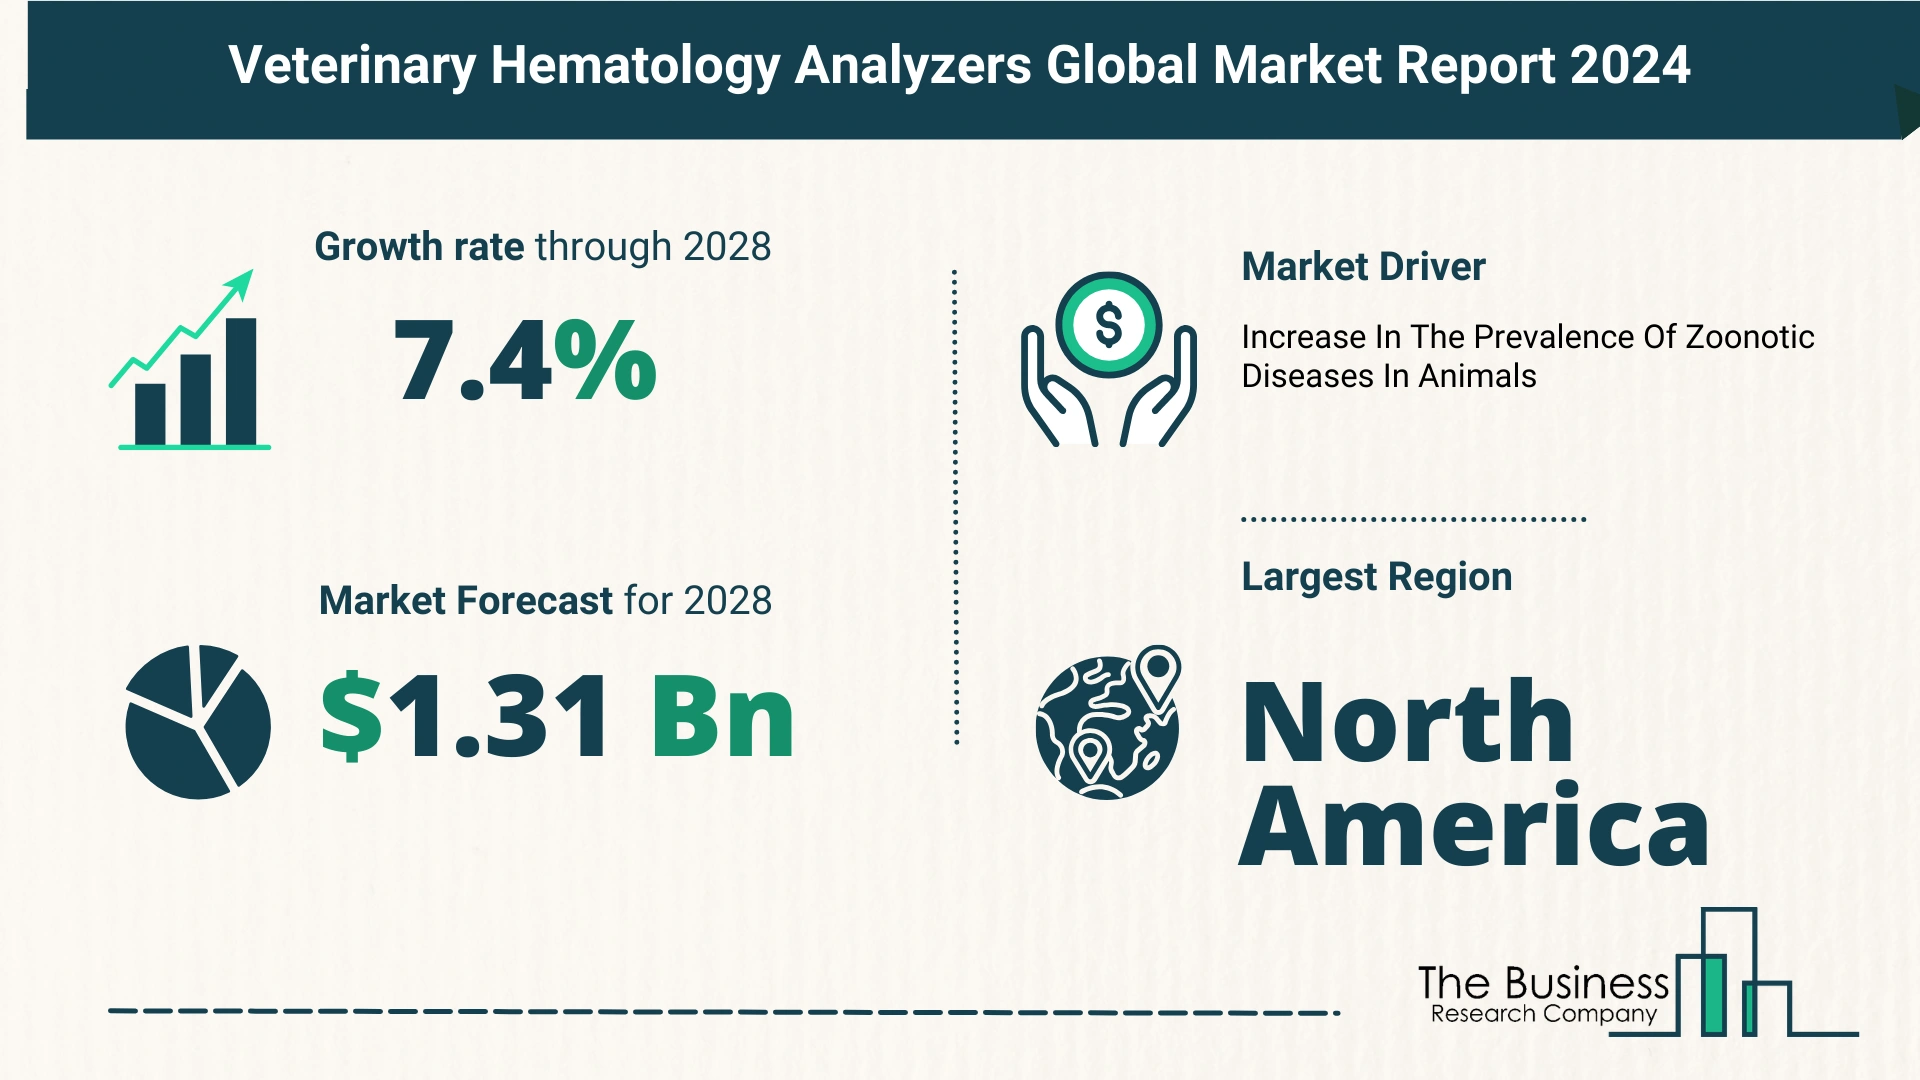 Key Takeaways From The Global Veterinary Hematology Analyzers Market Forecast 2024